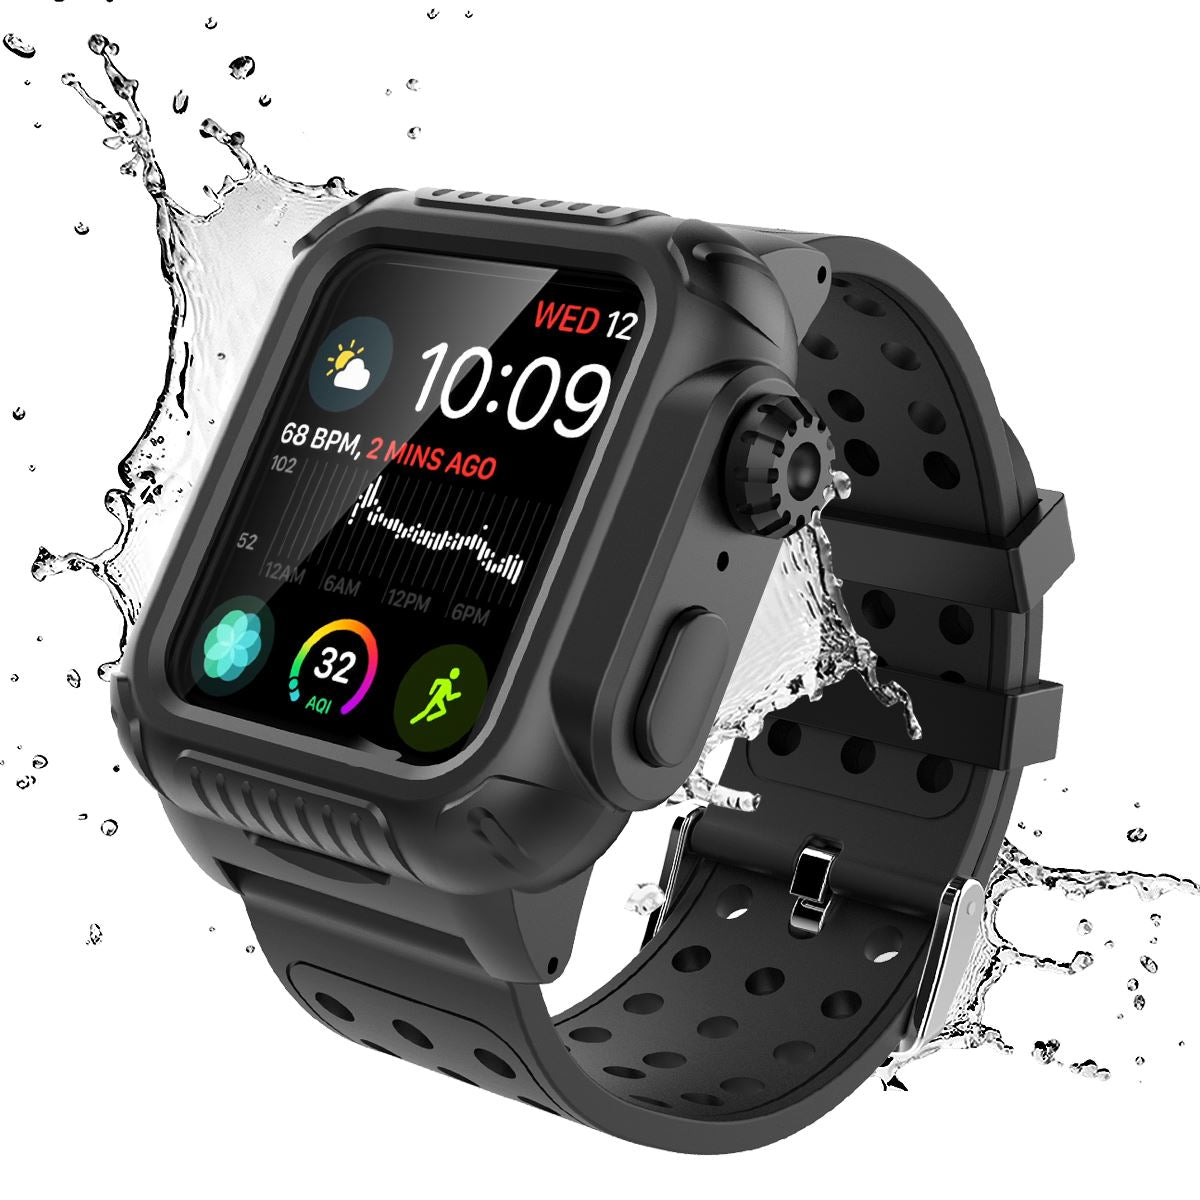 waterproof shockproof watch